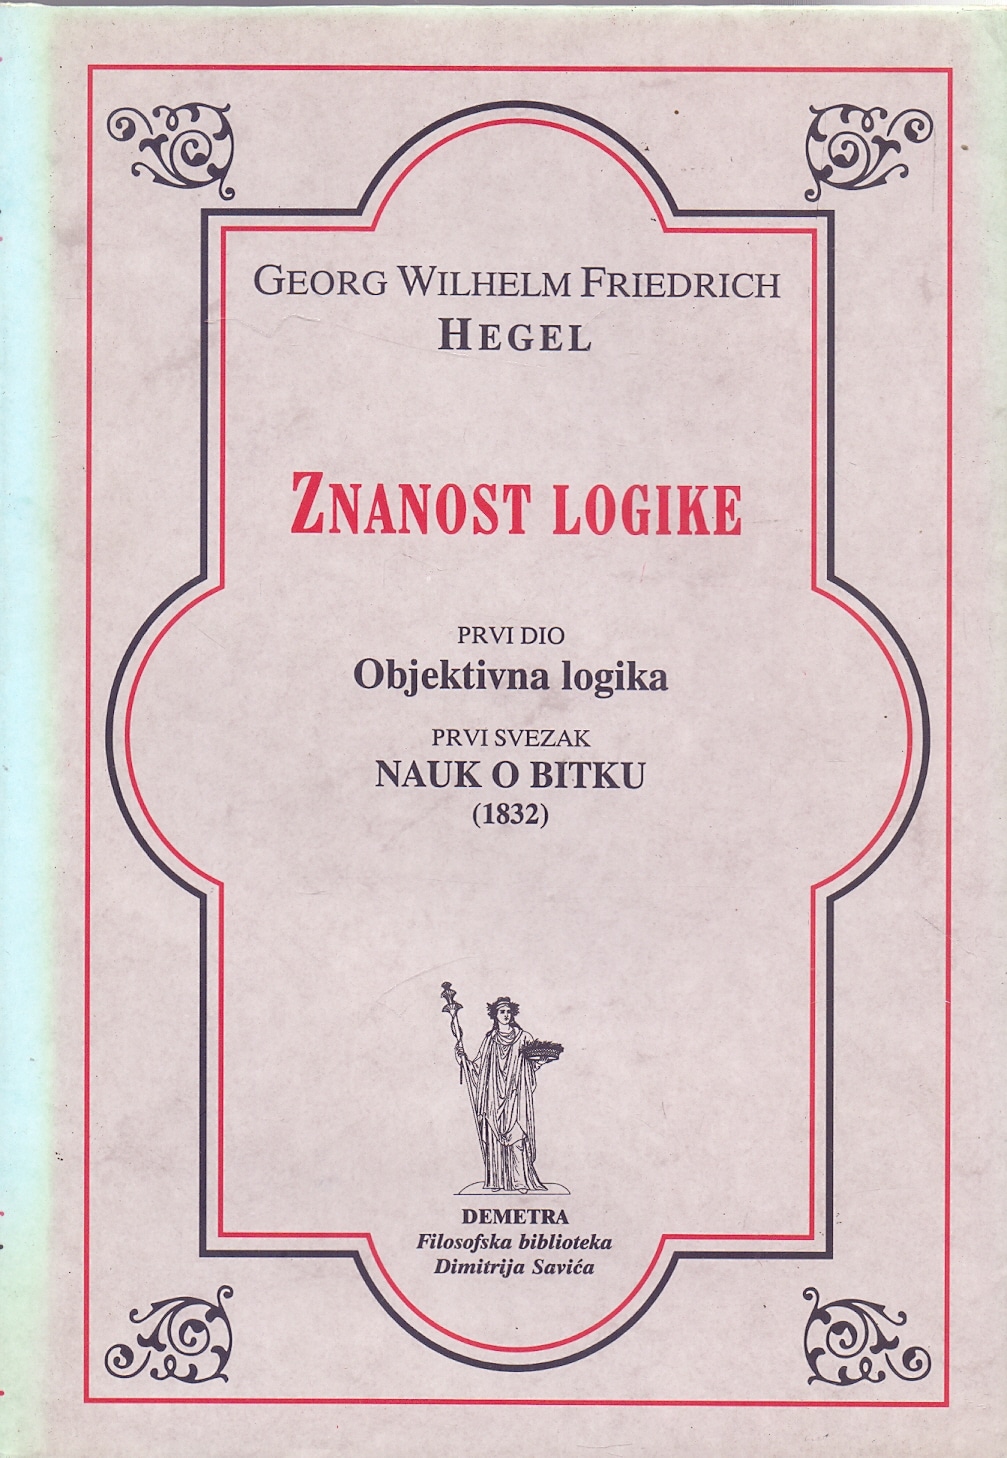 Znanost logike: Objektivna logika. Nauk o biti (1832) Georg Wilhelm Friedrich Hegel